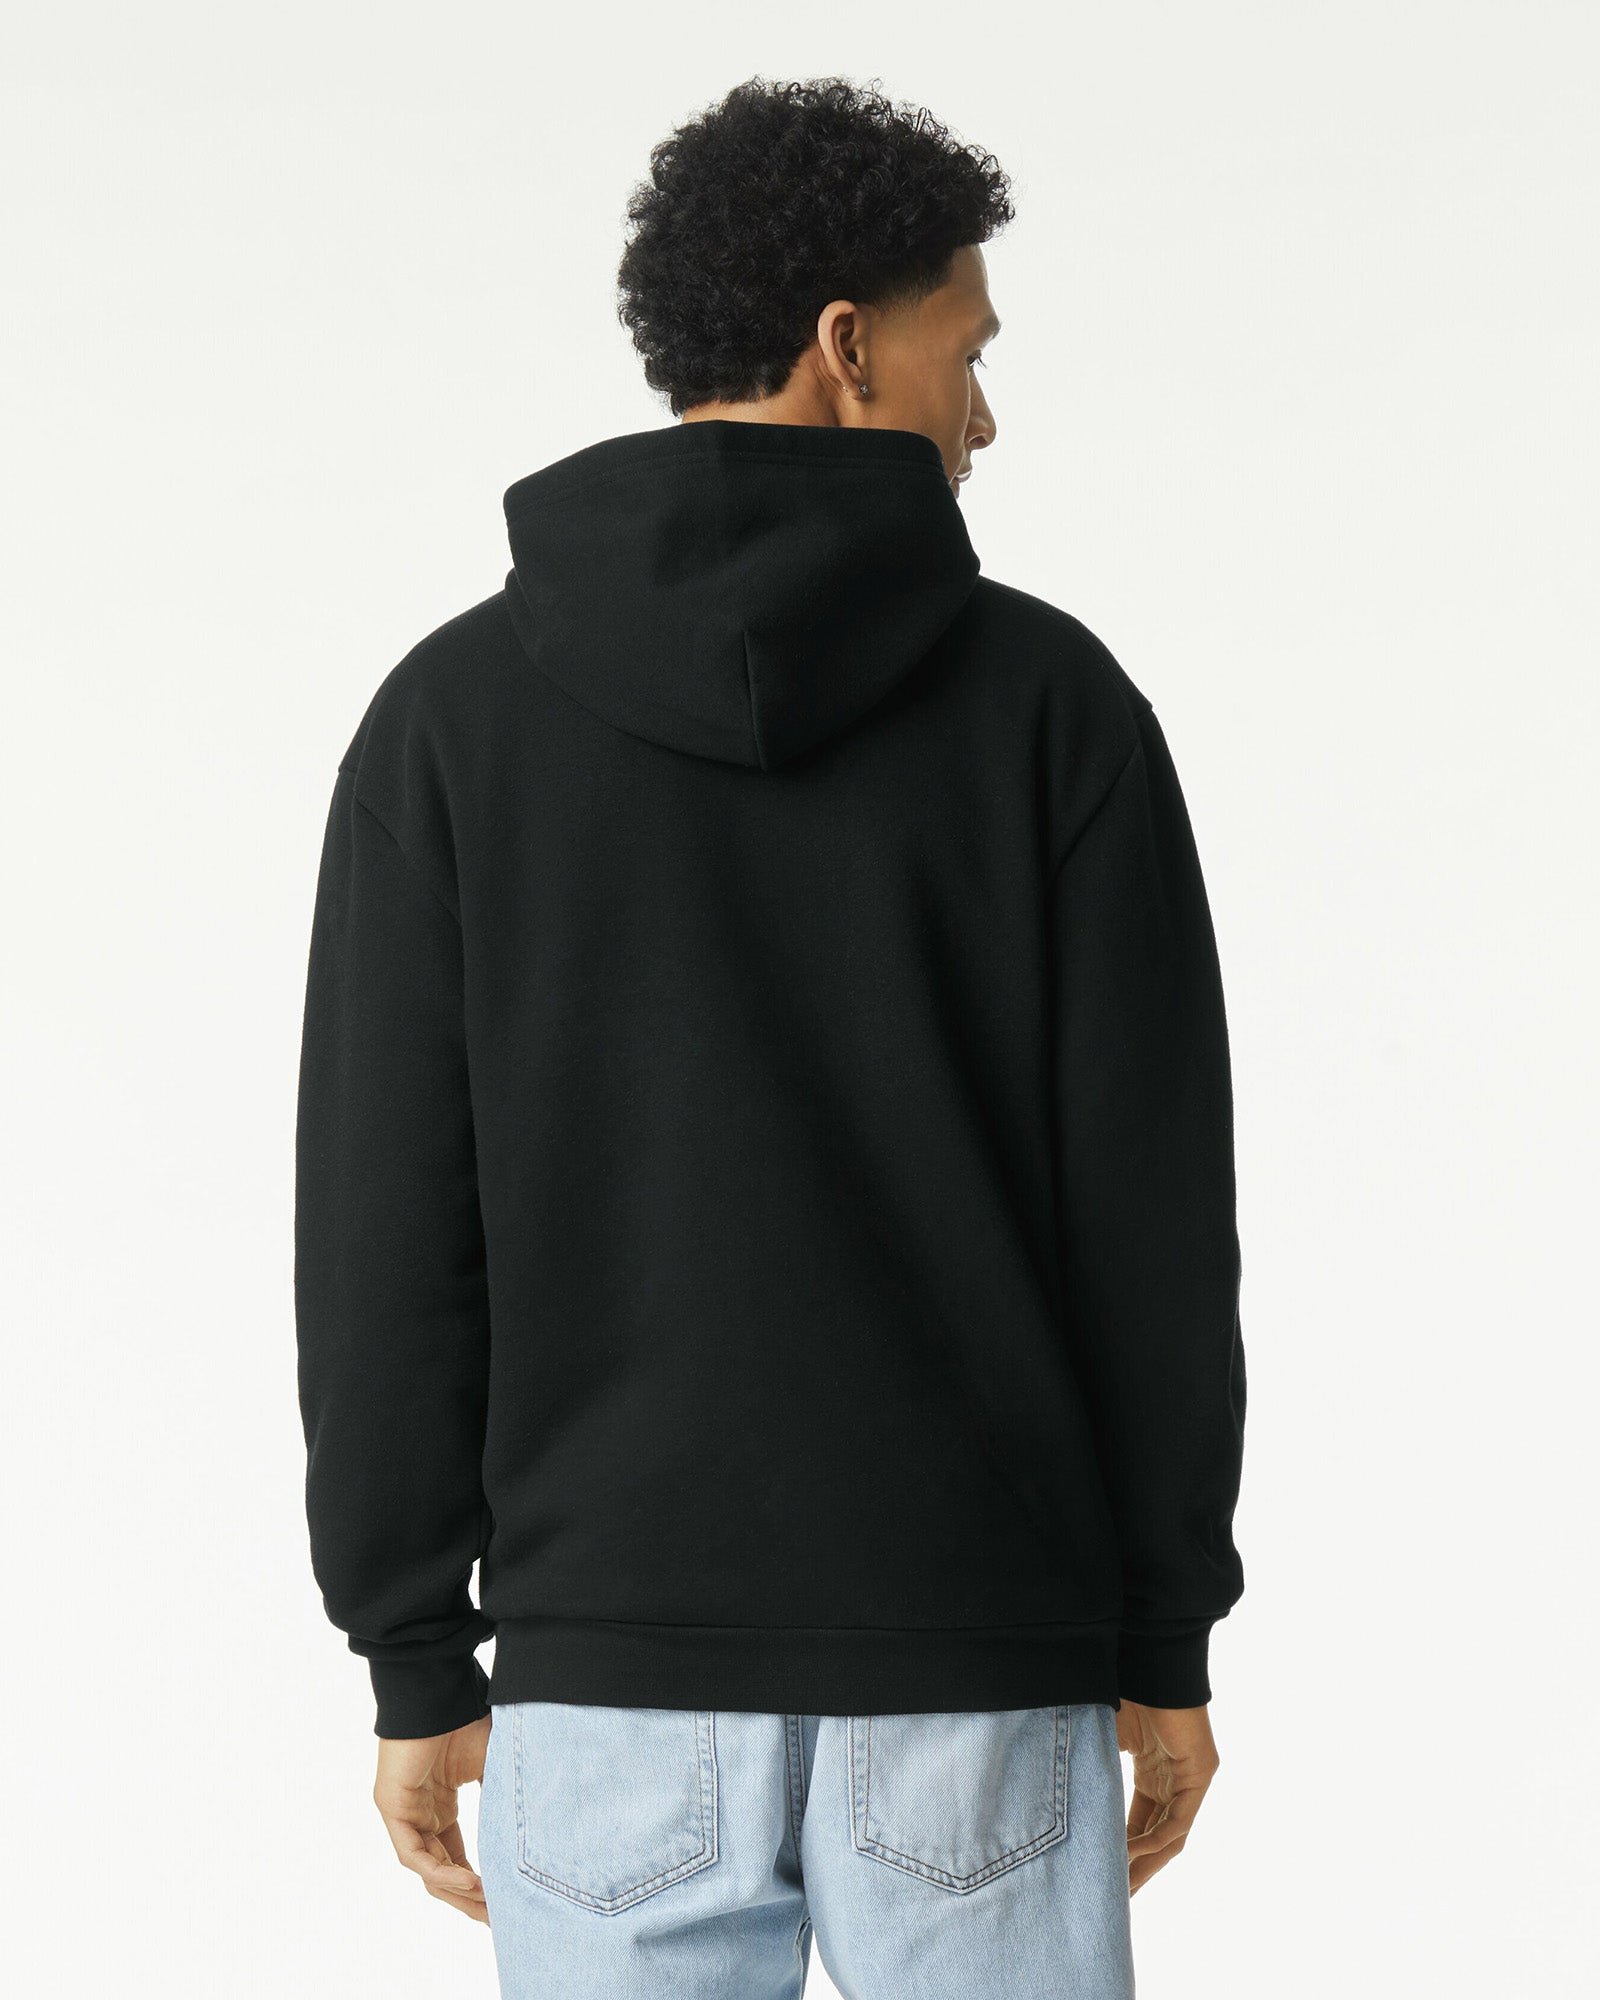 Reflex Full Zip Hooded Unisex Sweatshirt - Black